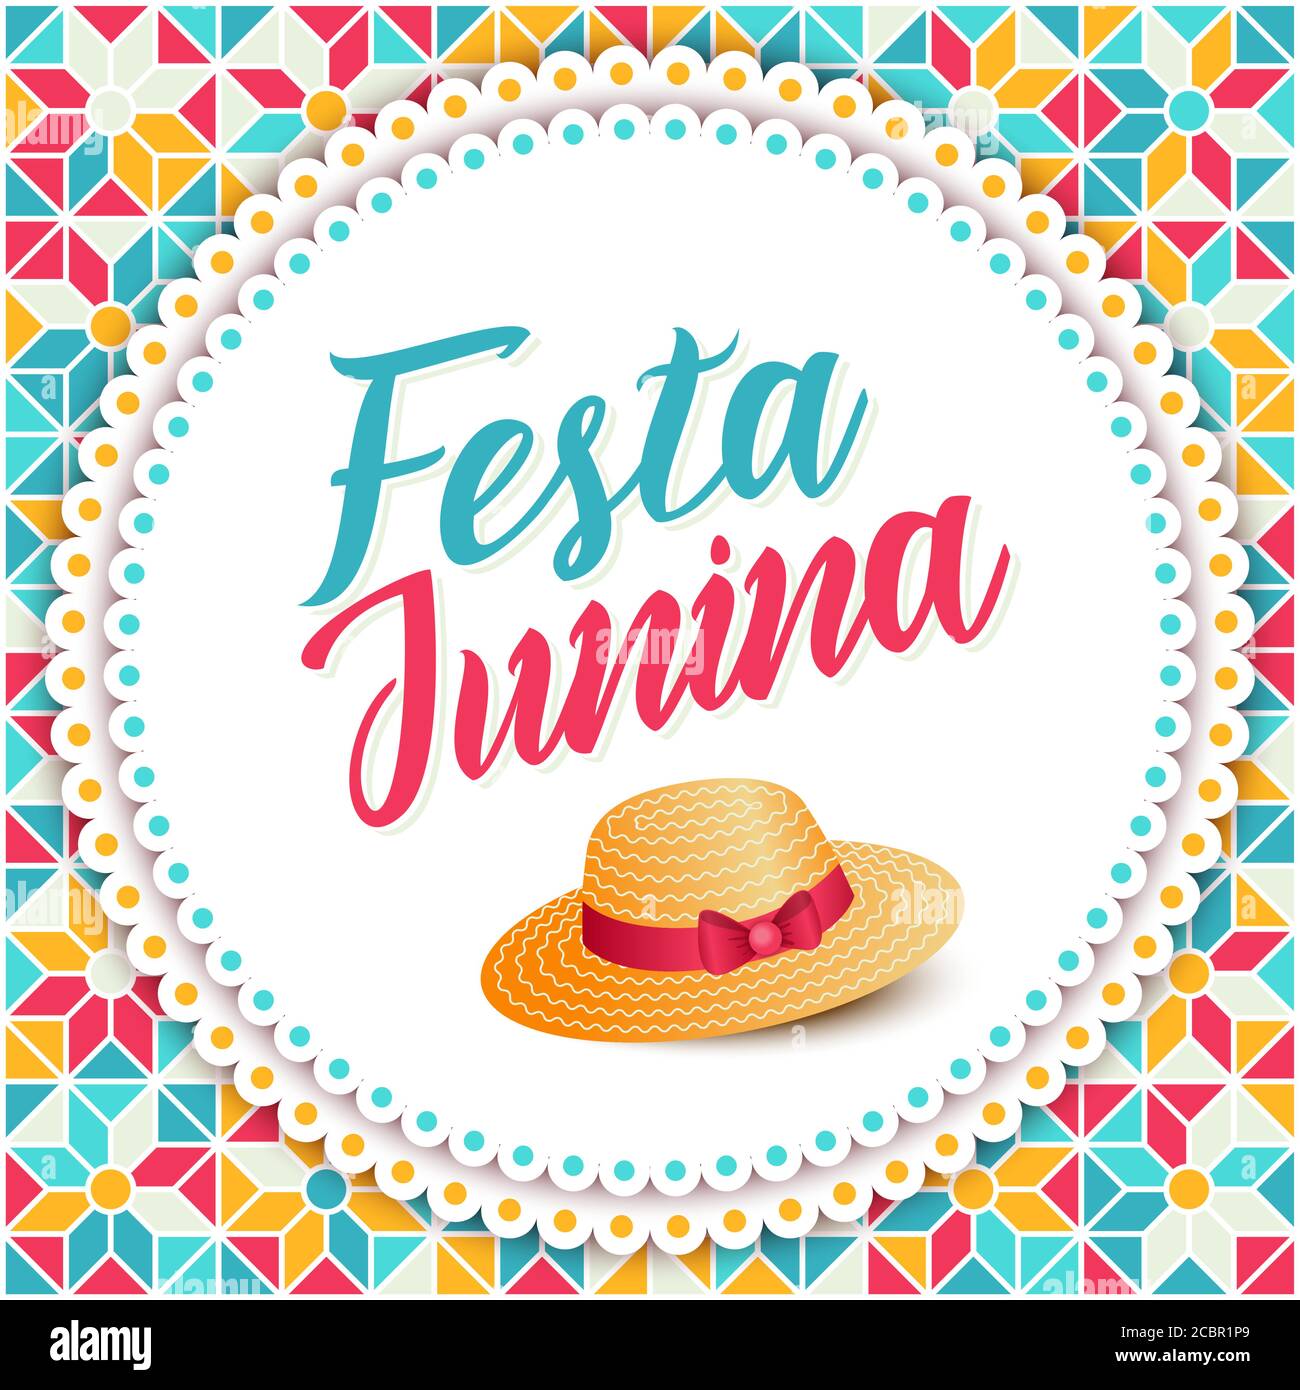 Festa Junina Illustration - traditionelle Brasilien juni Festival Party - Mittsommerurlaub. Karneval Hintergrund - Schriftzug Festa Junina, Strohhut auf Stock Vektor